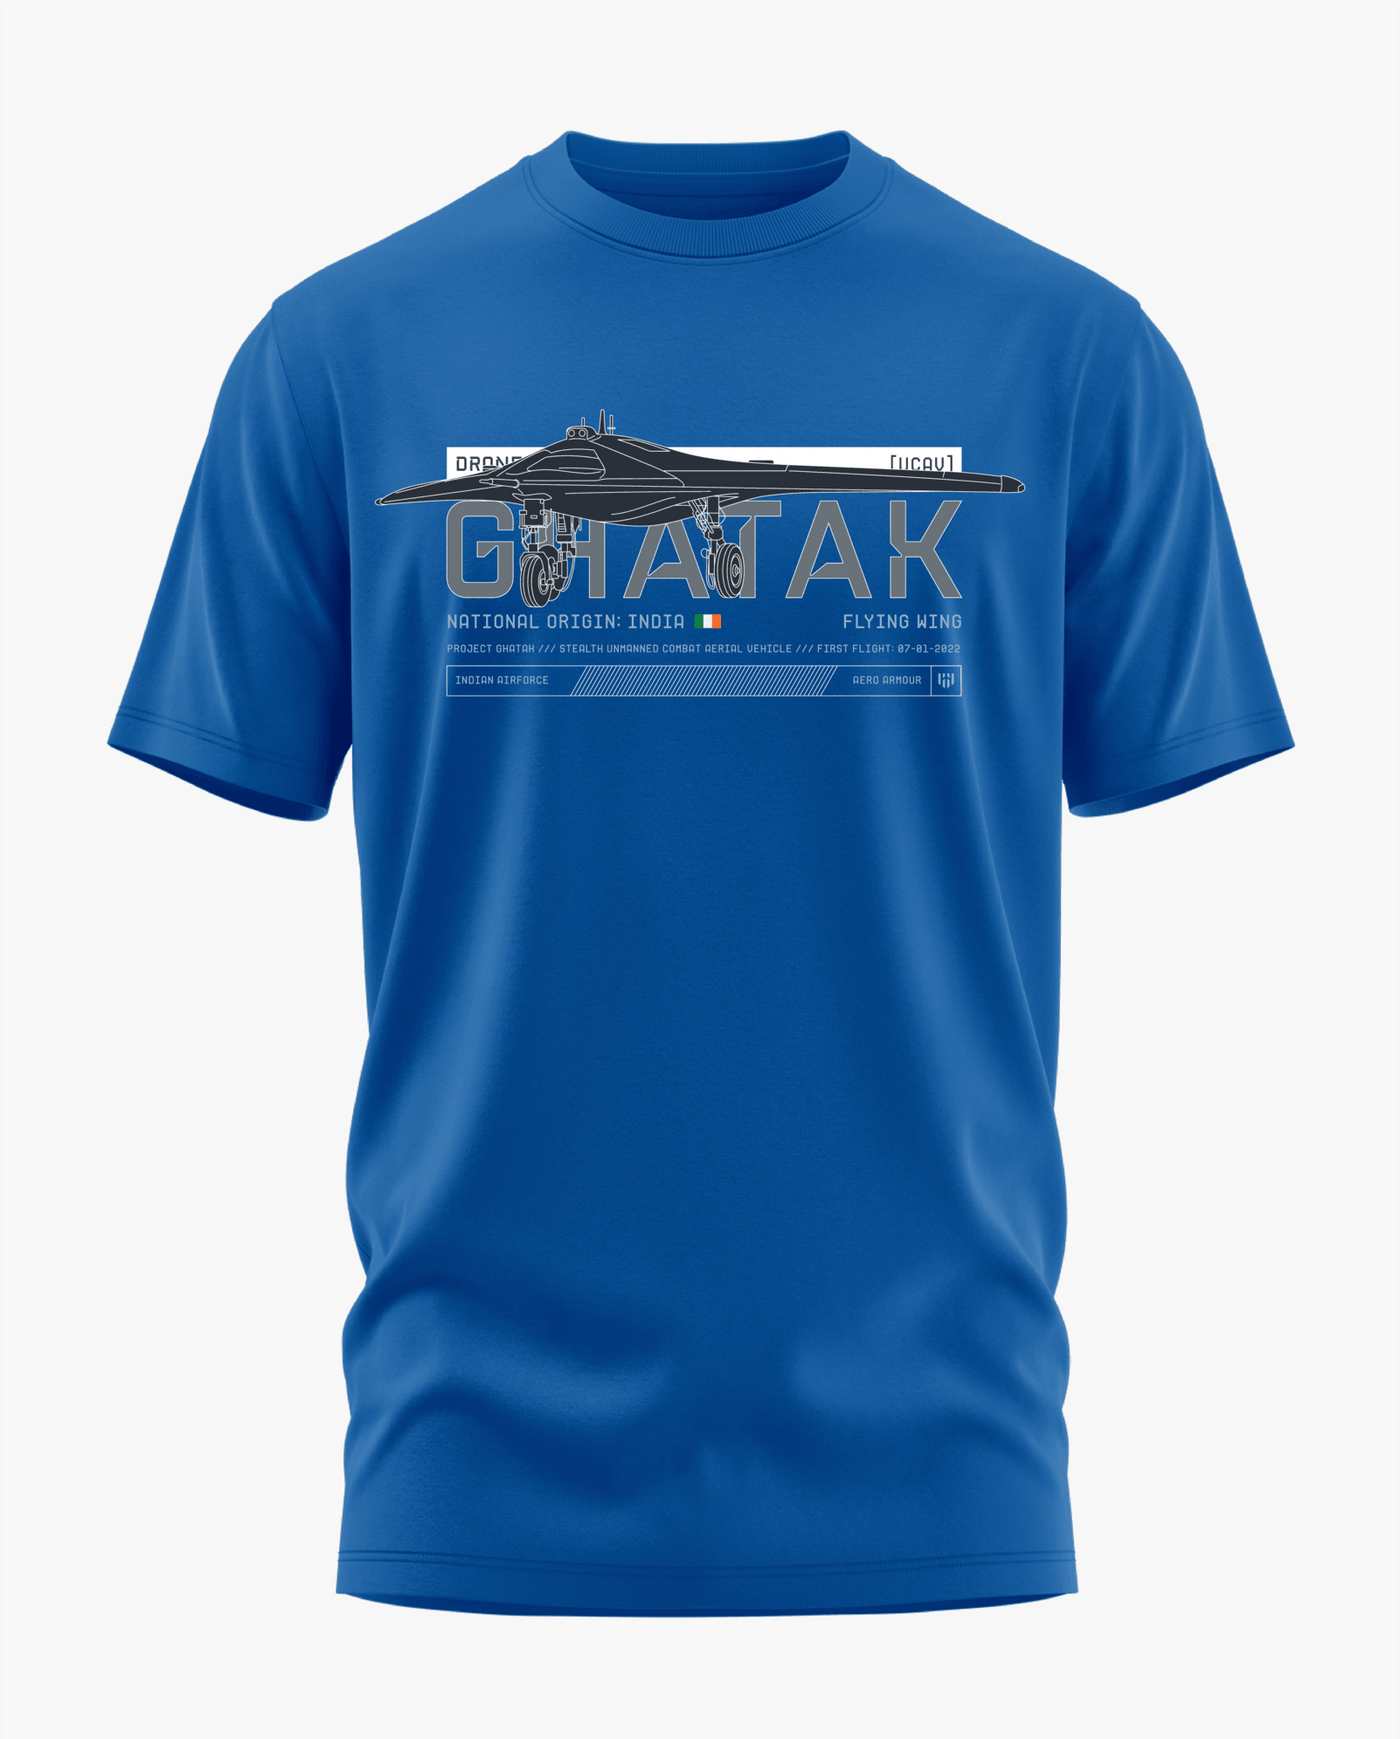 DRDO Ghatak T-Shirt - Aero Armour